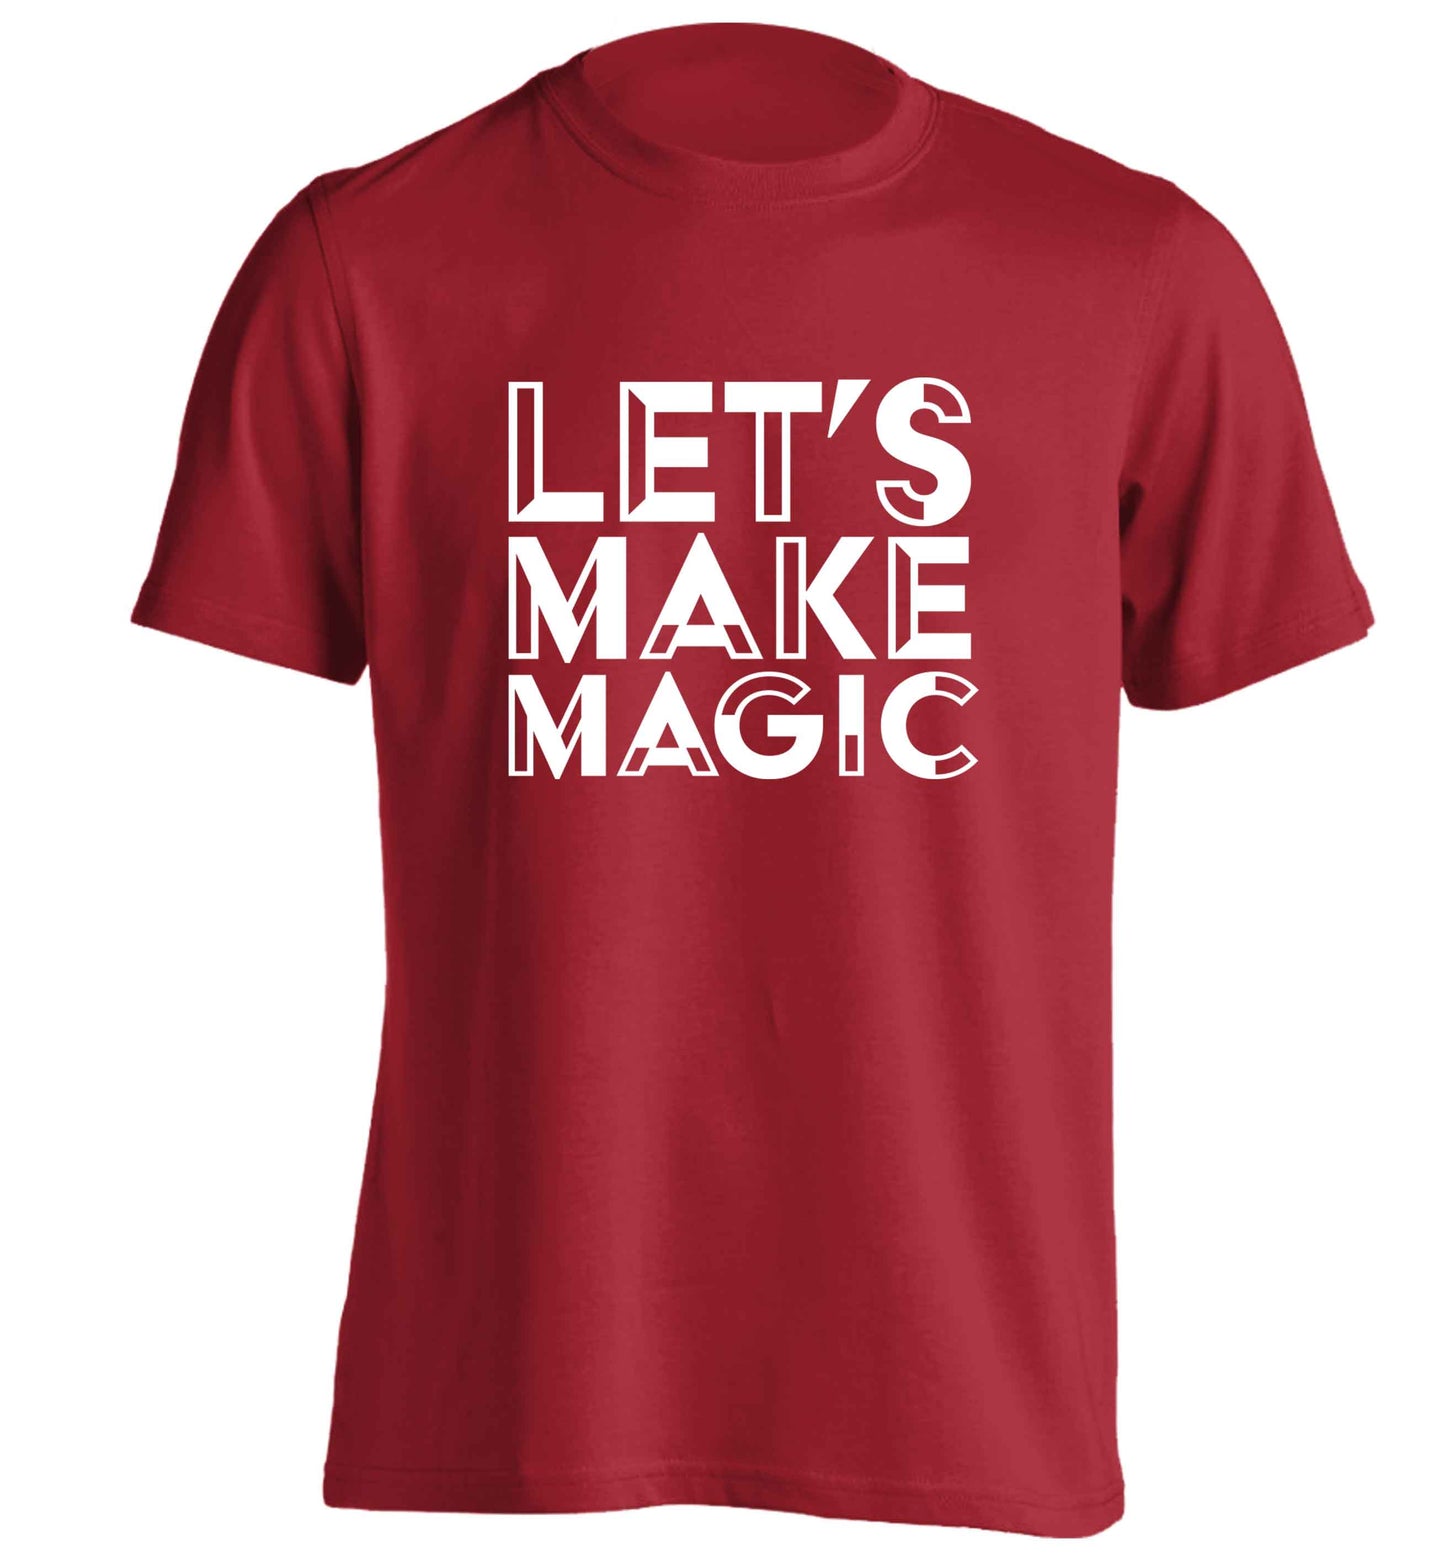 Let's make magic adults unisex red Tshirt 2XL